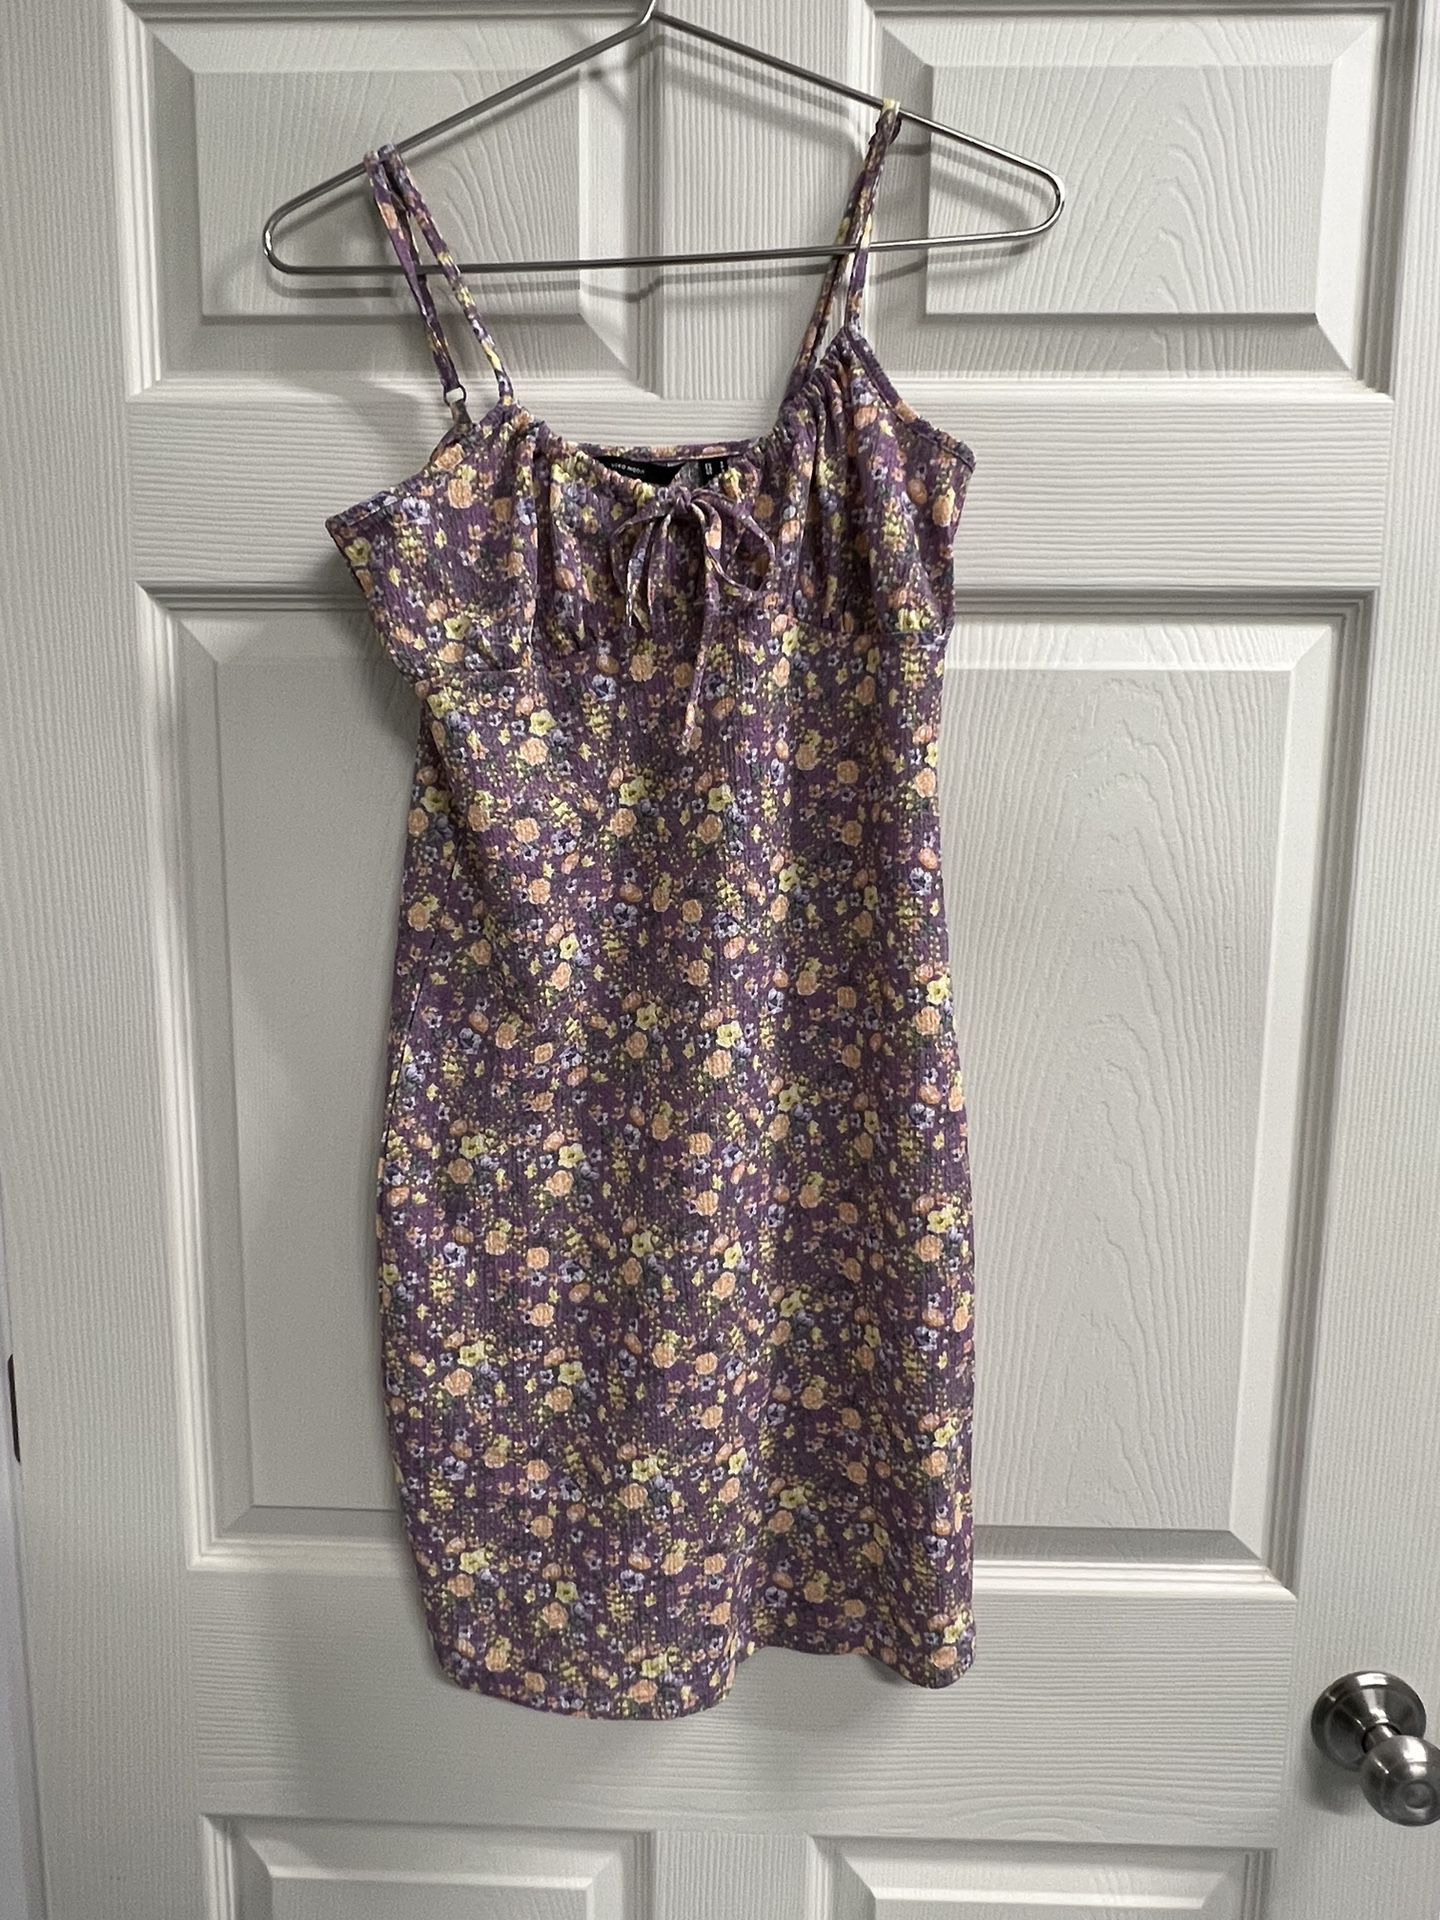 Vero Moda Purple Floral Sun Dress - Size S - VGUC